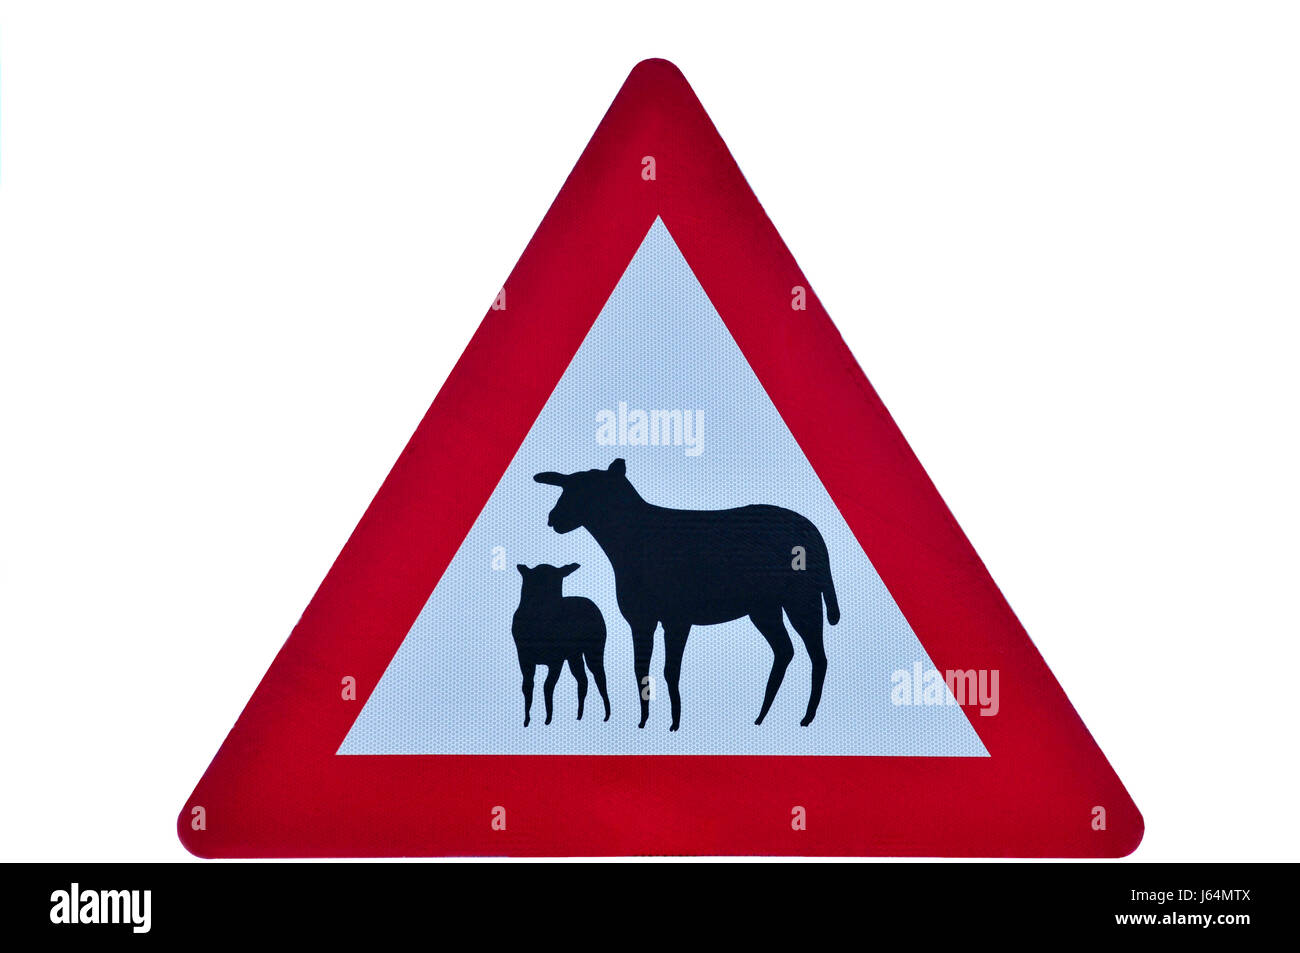 Atención de OVEJAS OVEJAS (pl.) signo ovejas carretera transporte de señal Foto de stock